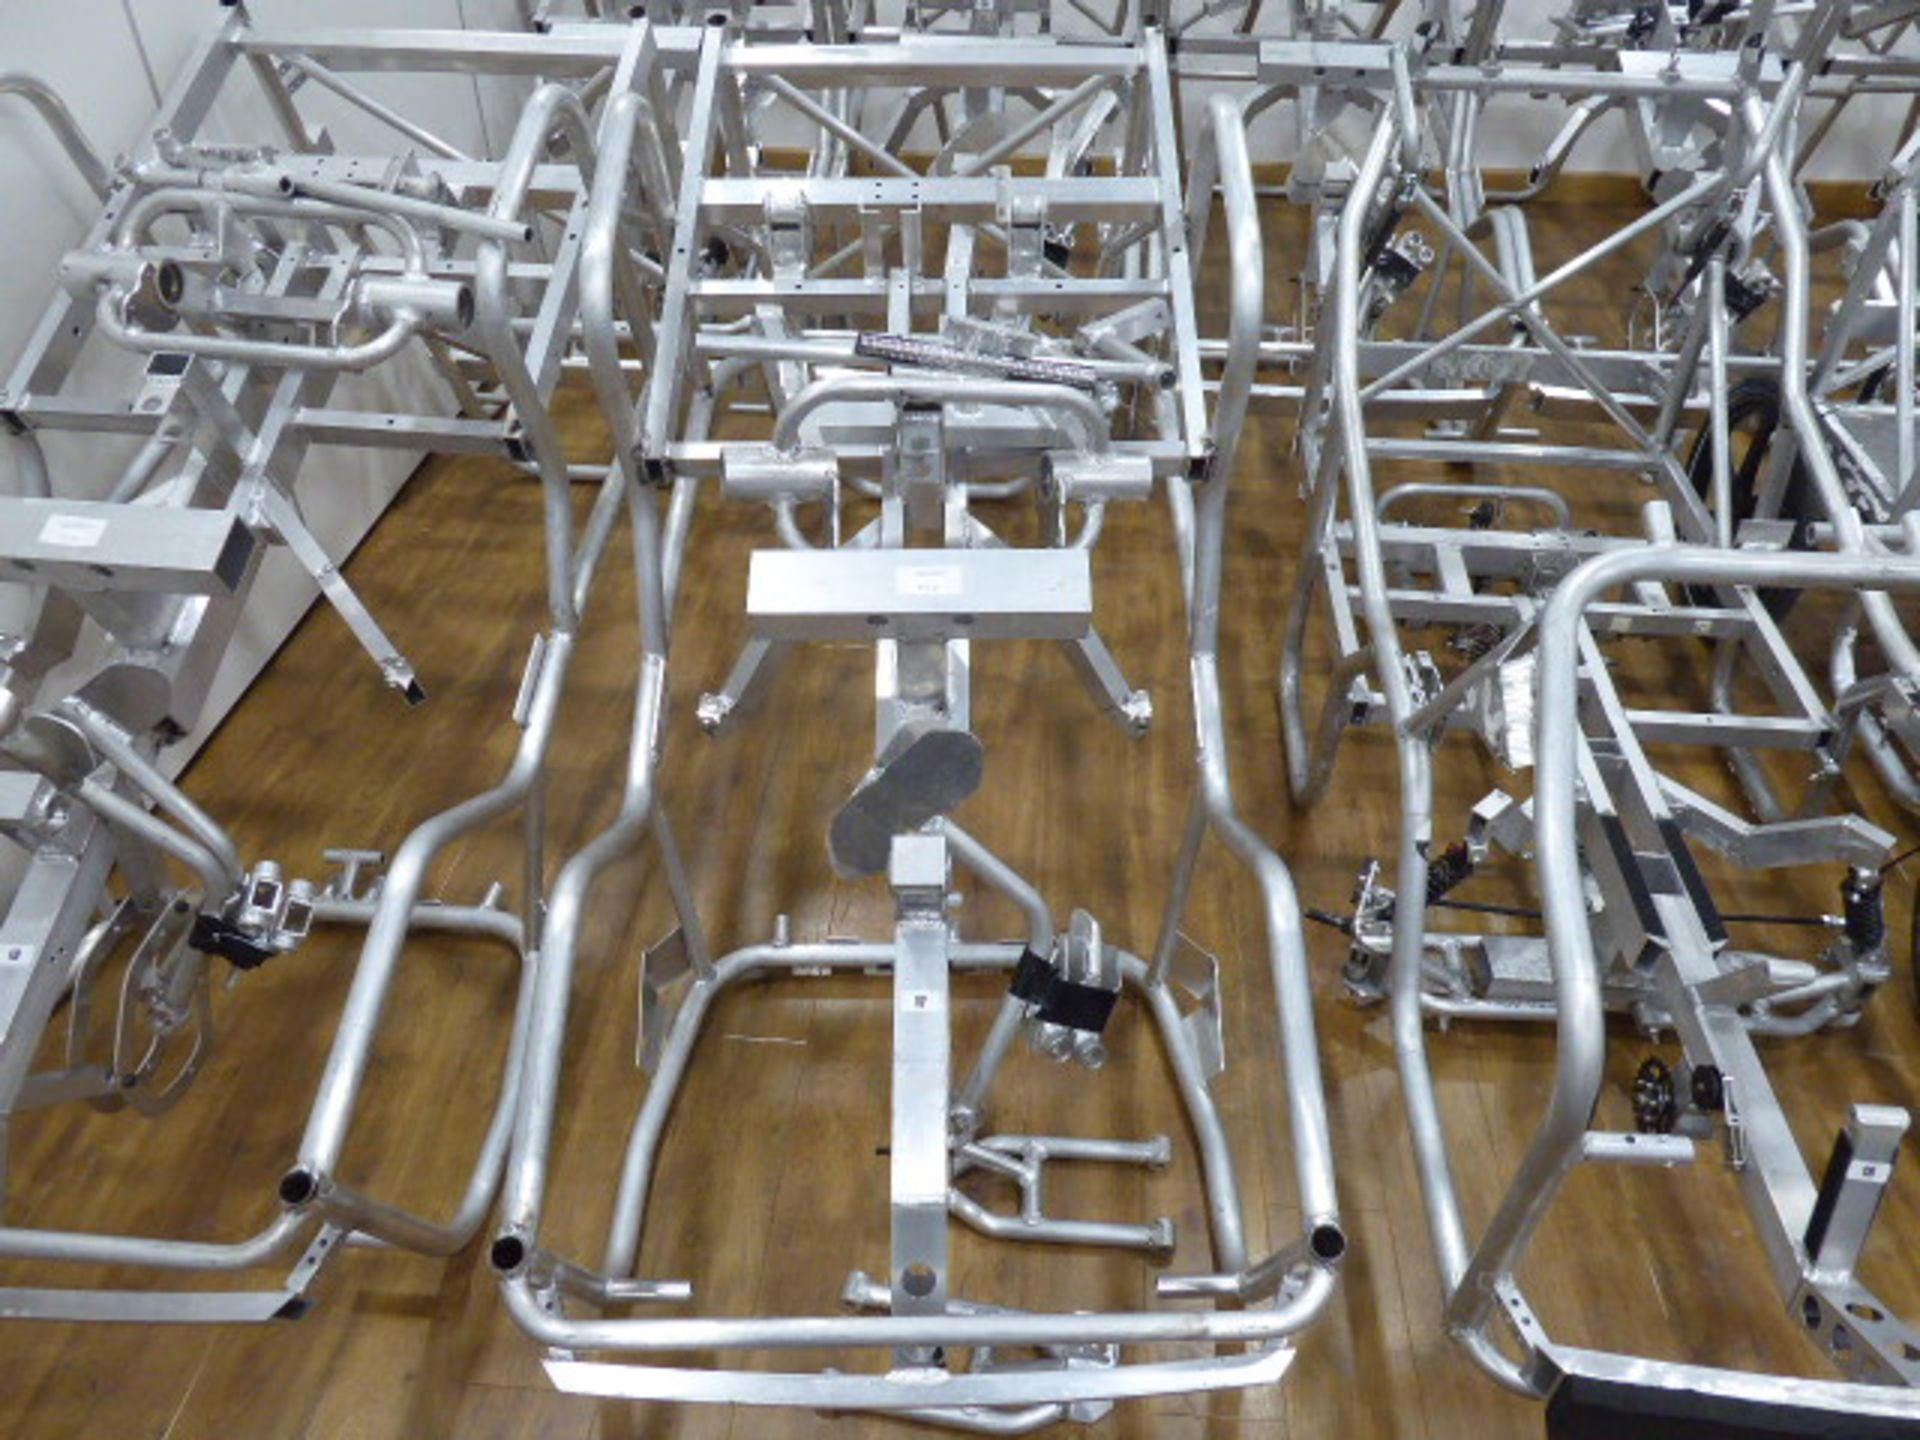 DryCycle aluminium frame and associated aluminium parts